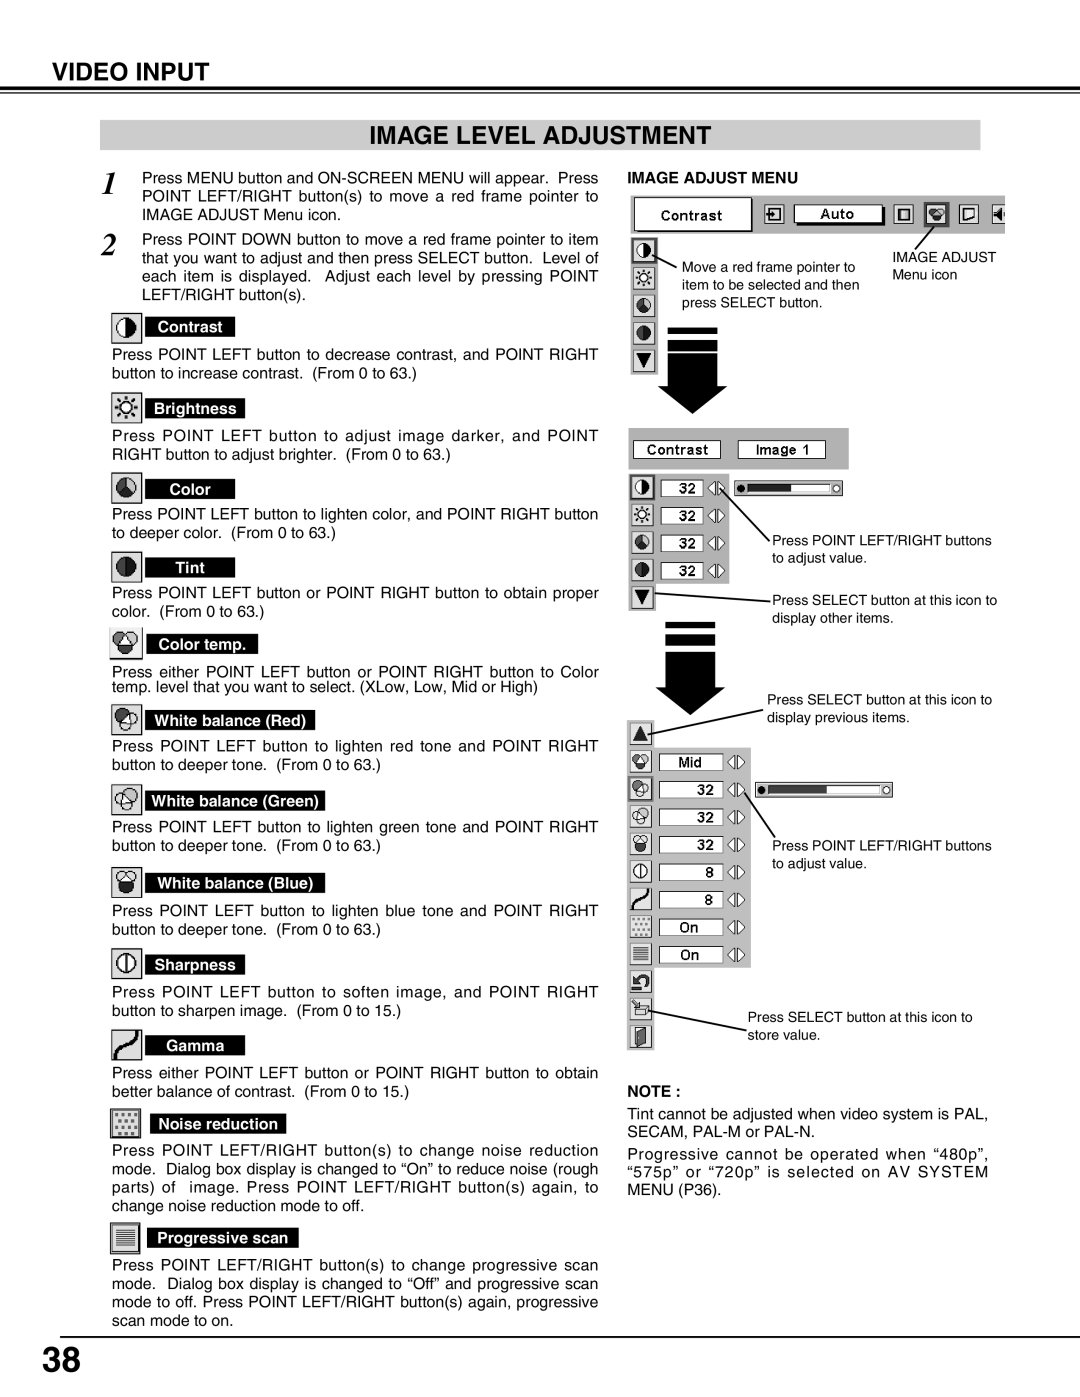 Eiki LC-UXT3 instruction manual Video Input Image Level Adjustment, Image Adjust Menu 